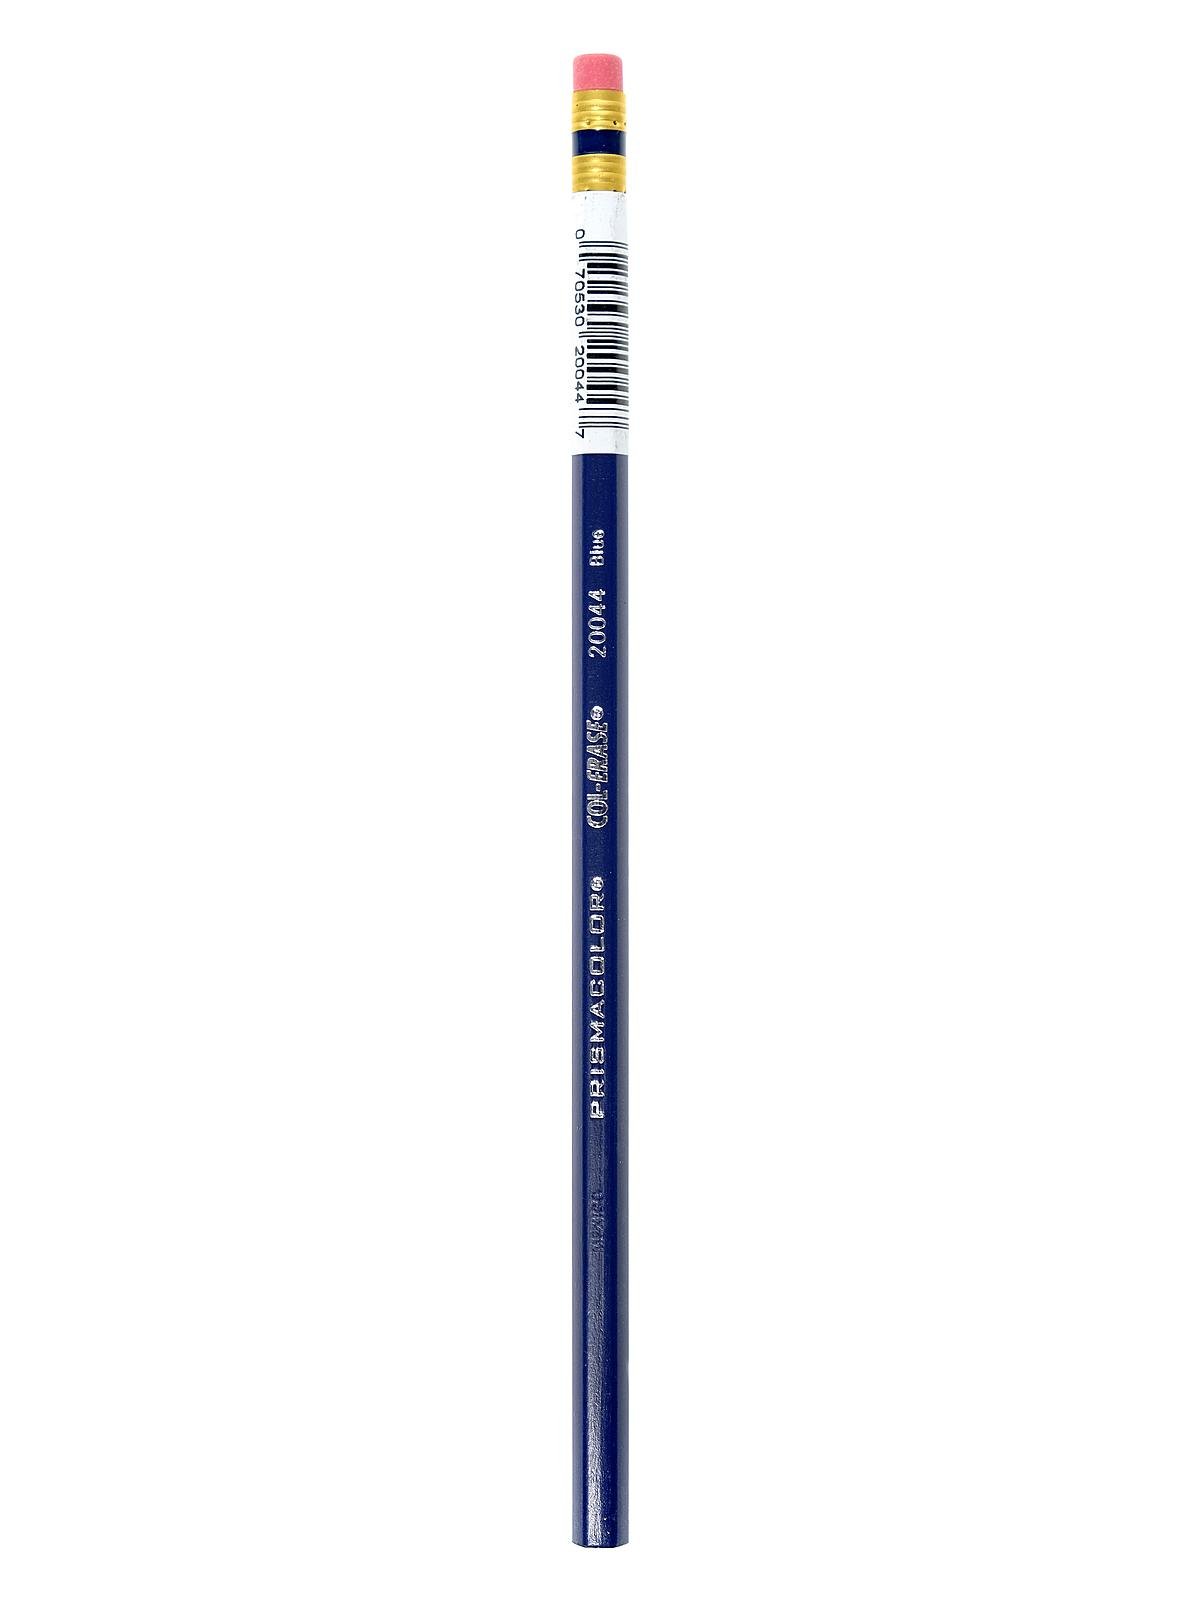 Col-Erase Colored Pencil Review